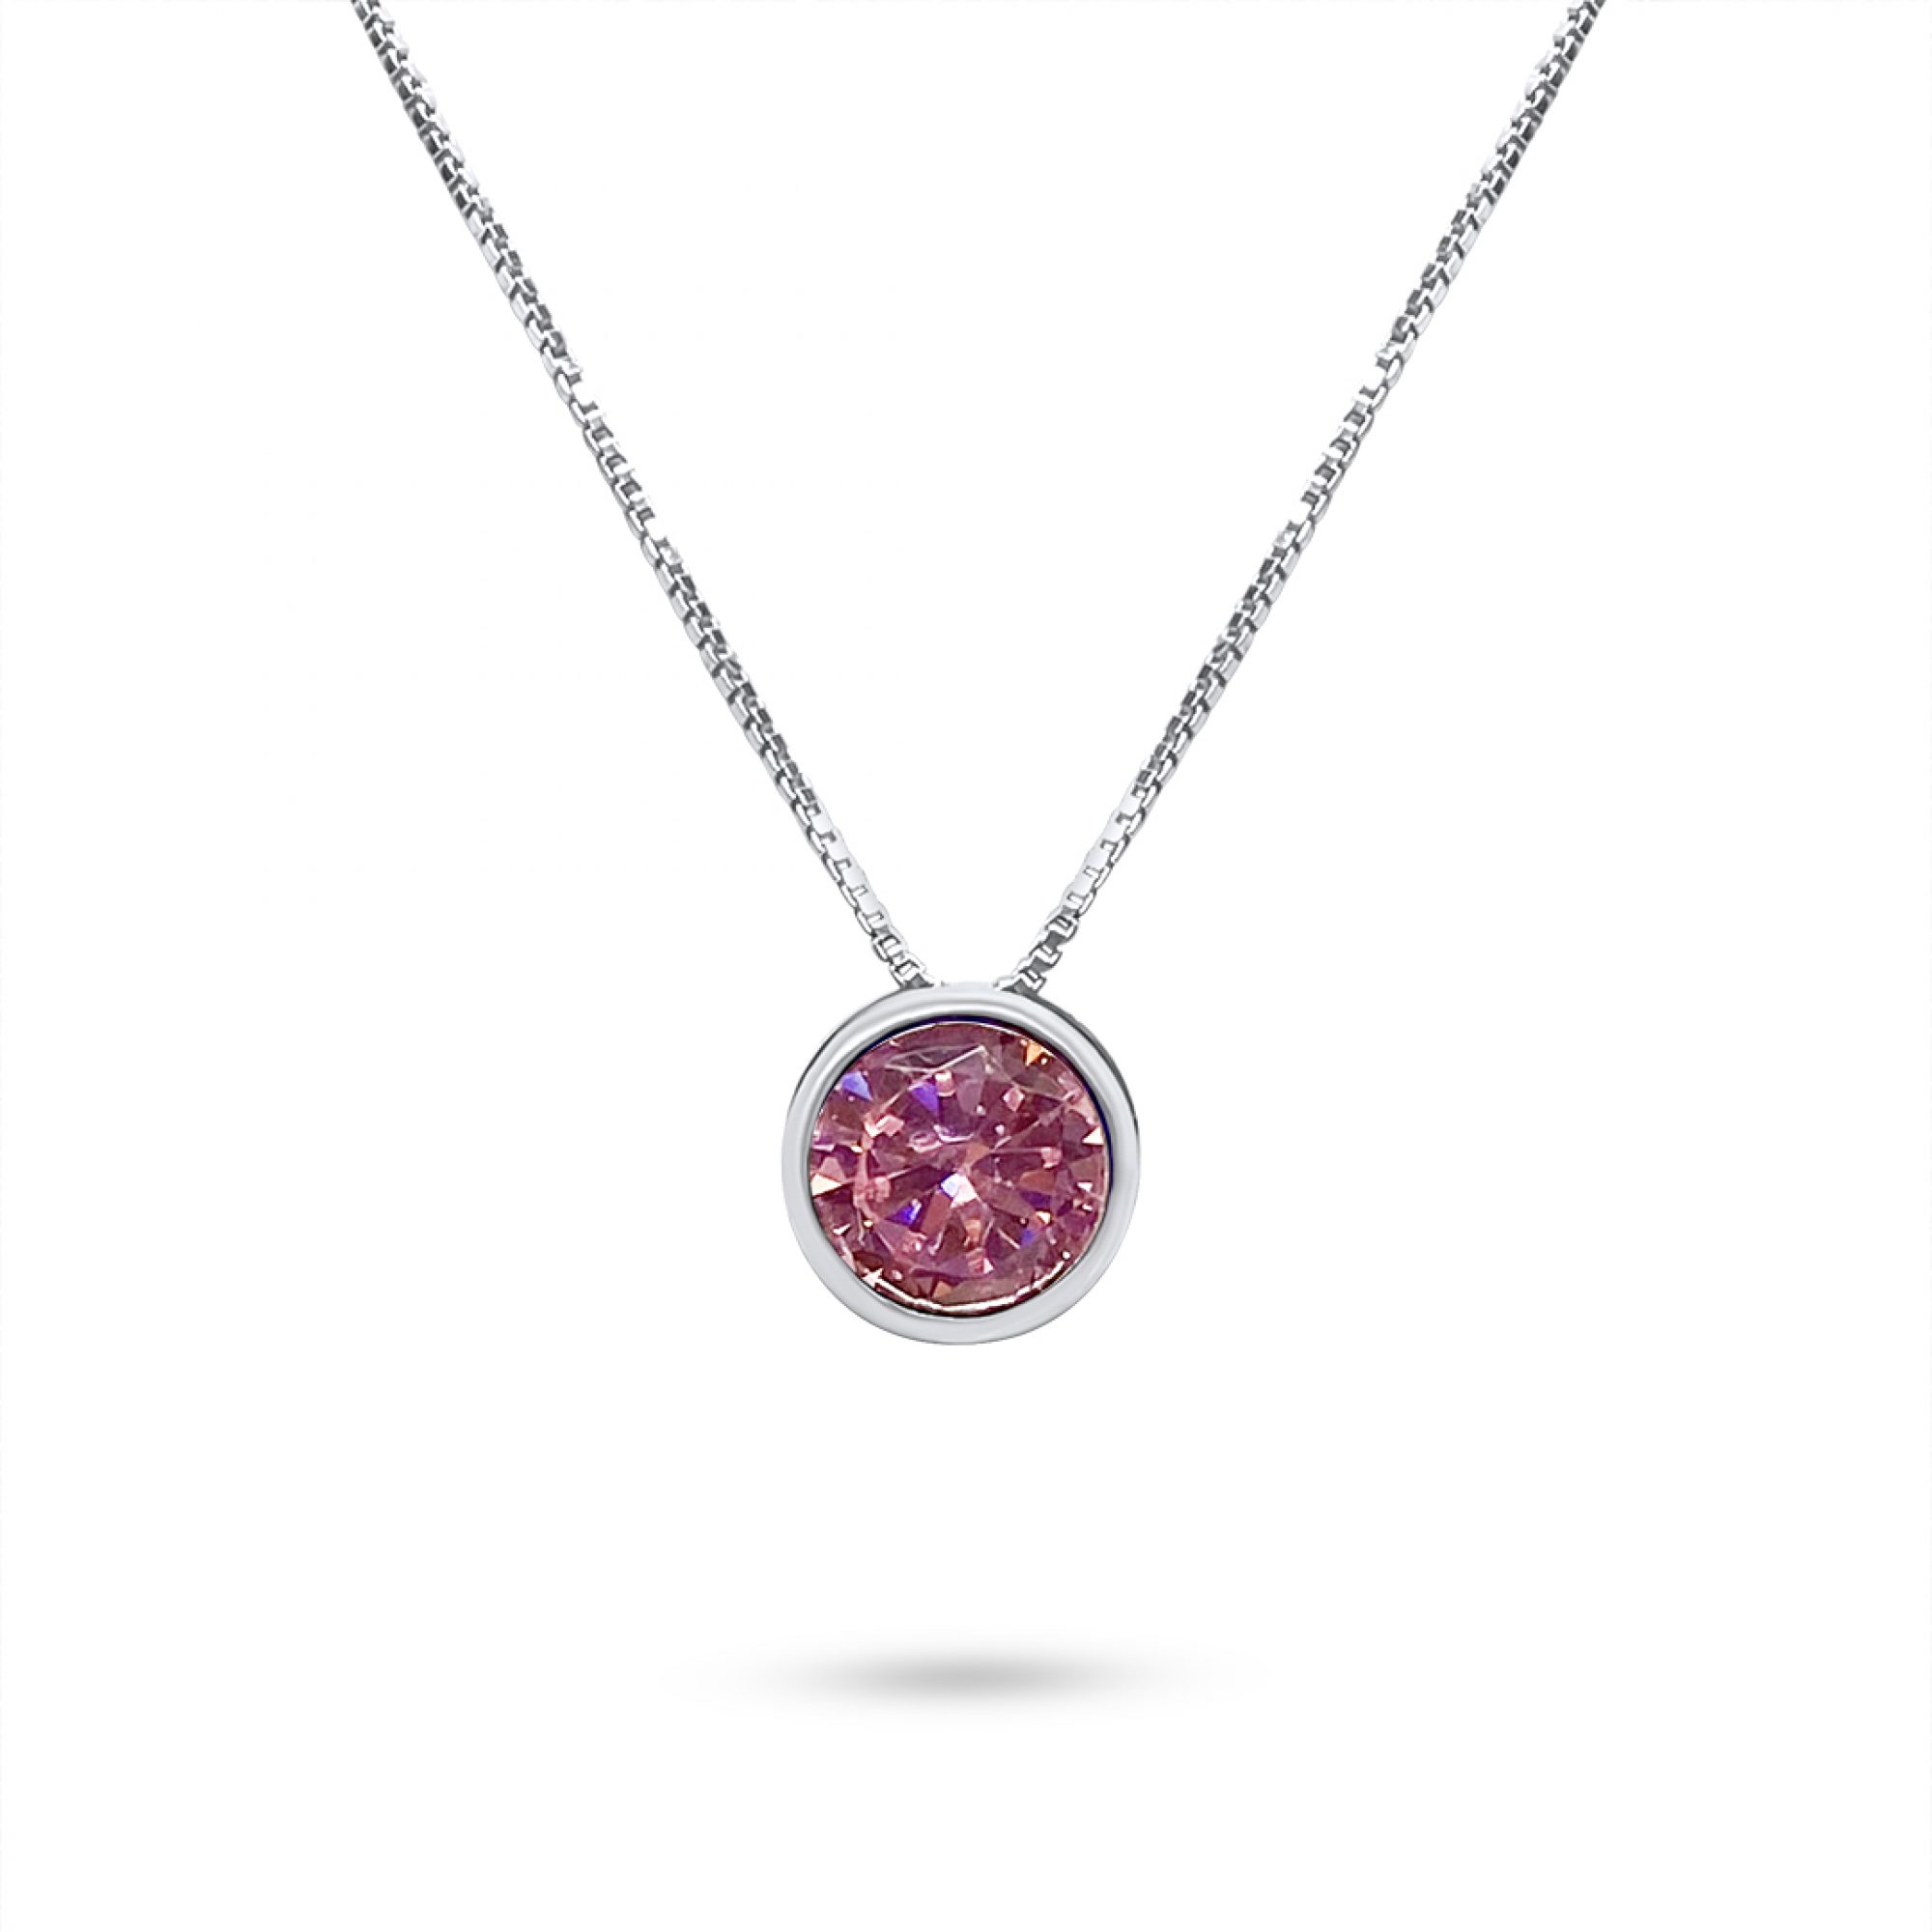 Necklace with pink quartz stone